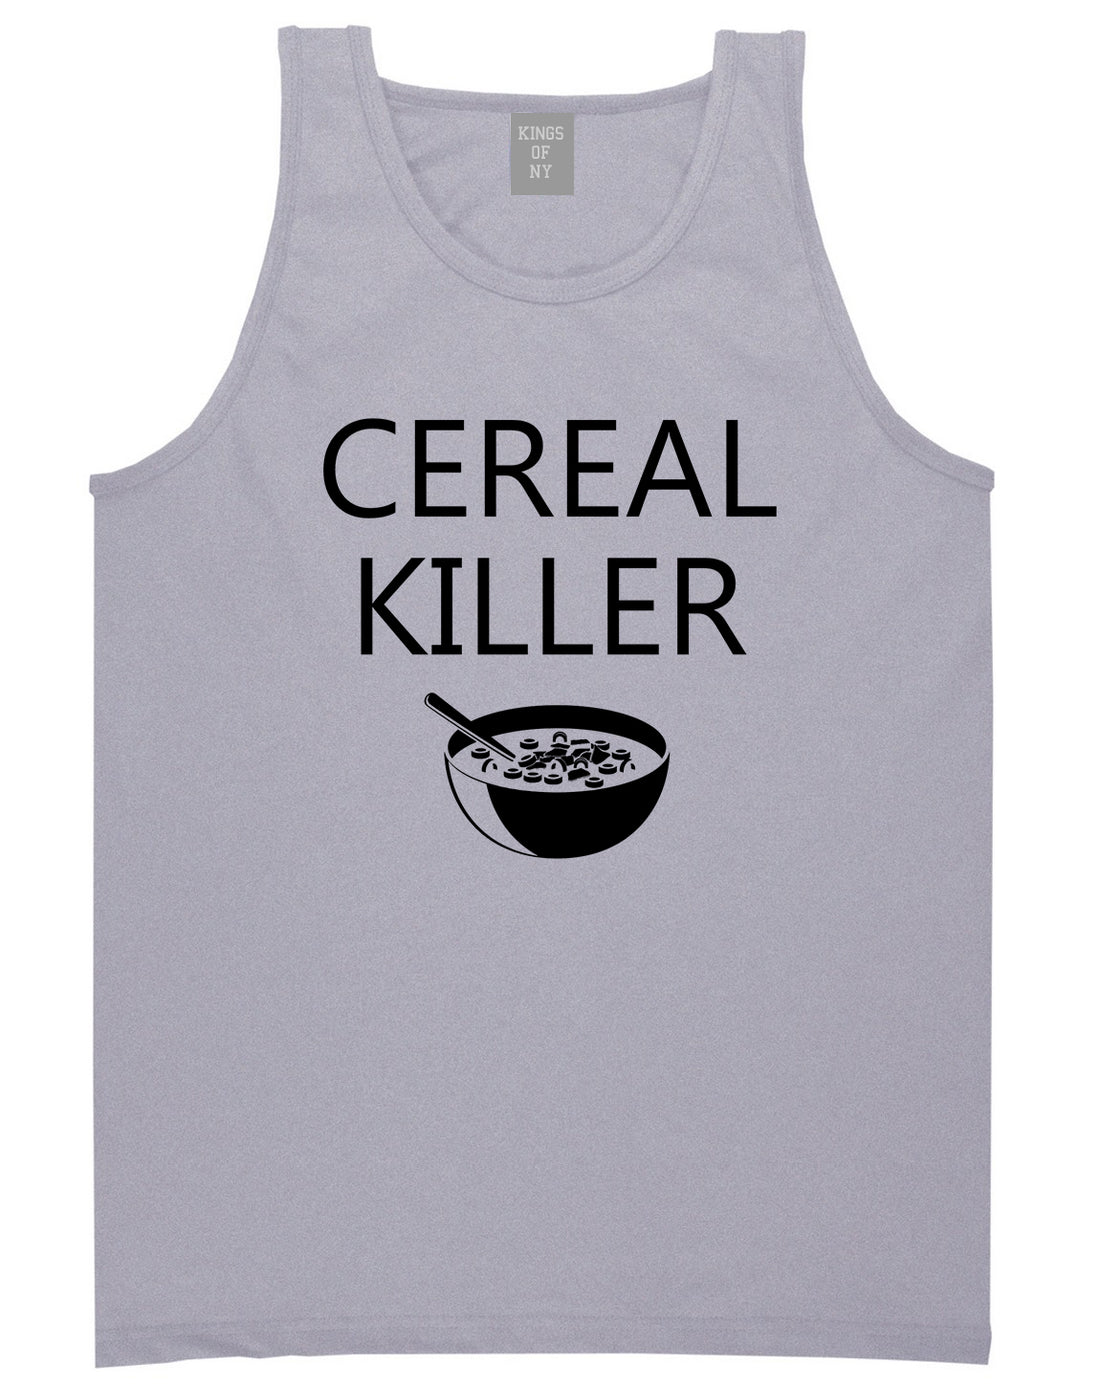 Cereal Killer Funny Halloween Mens Tank Top T-Shirt Grey